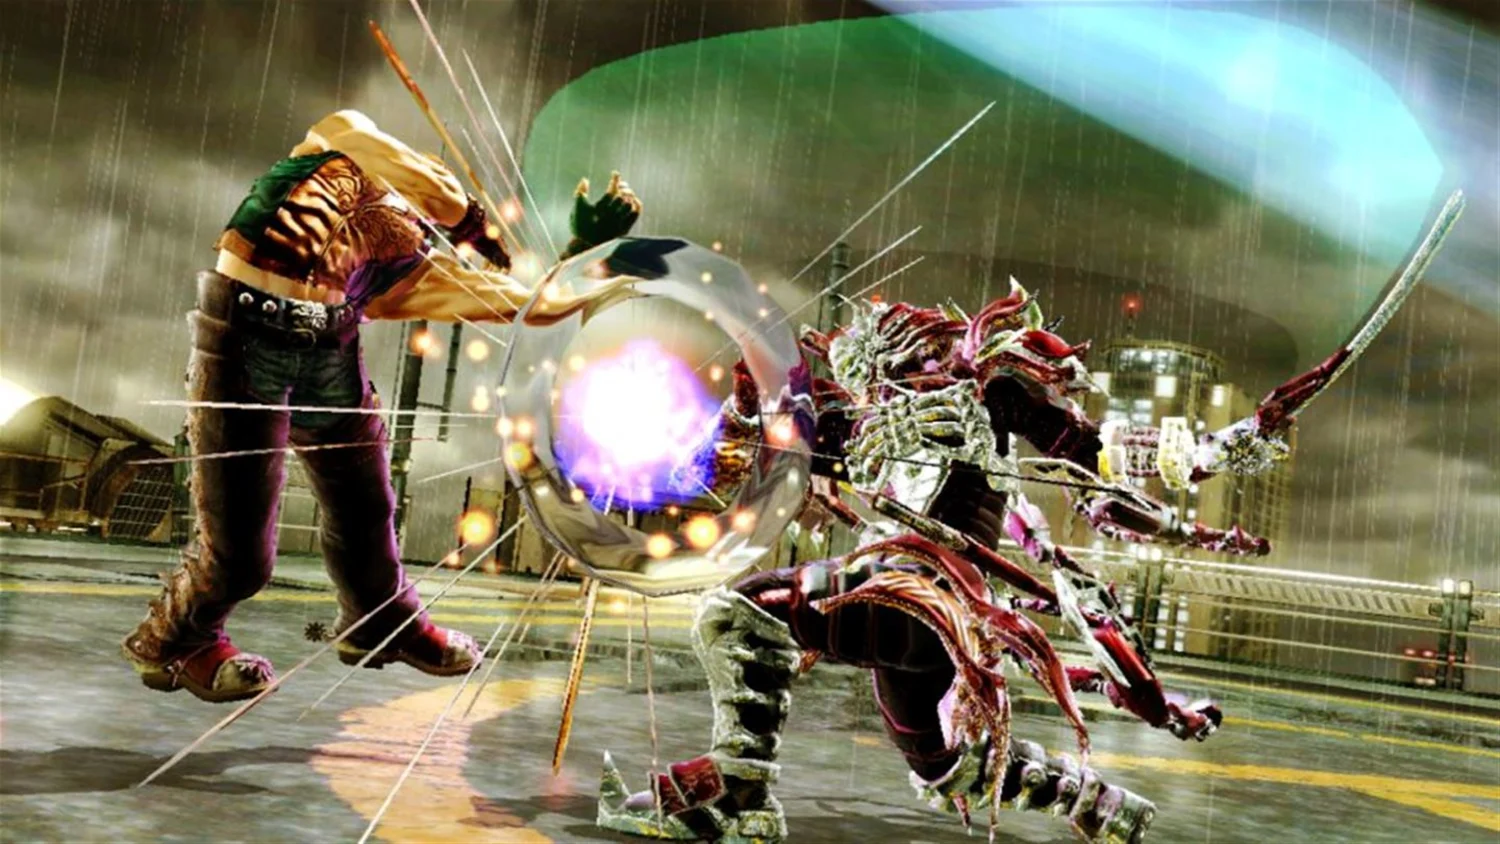 Jogo Tekken 6 - PS3 - Comprar Jogos